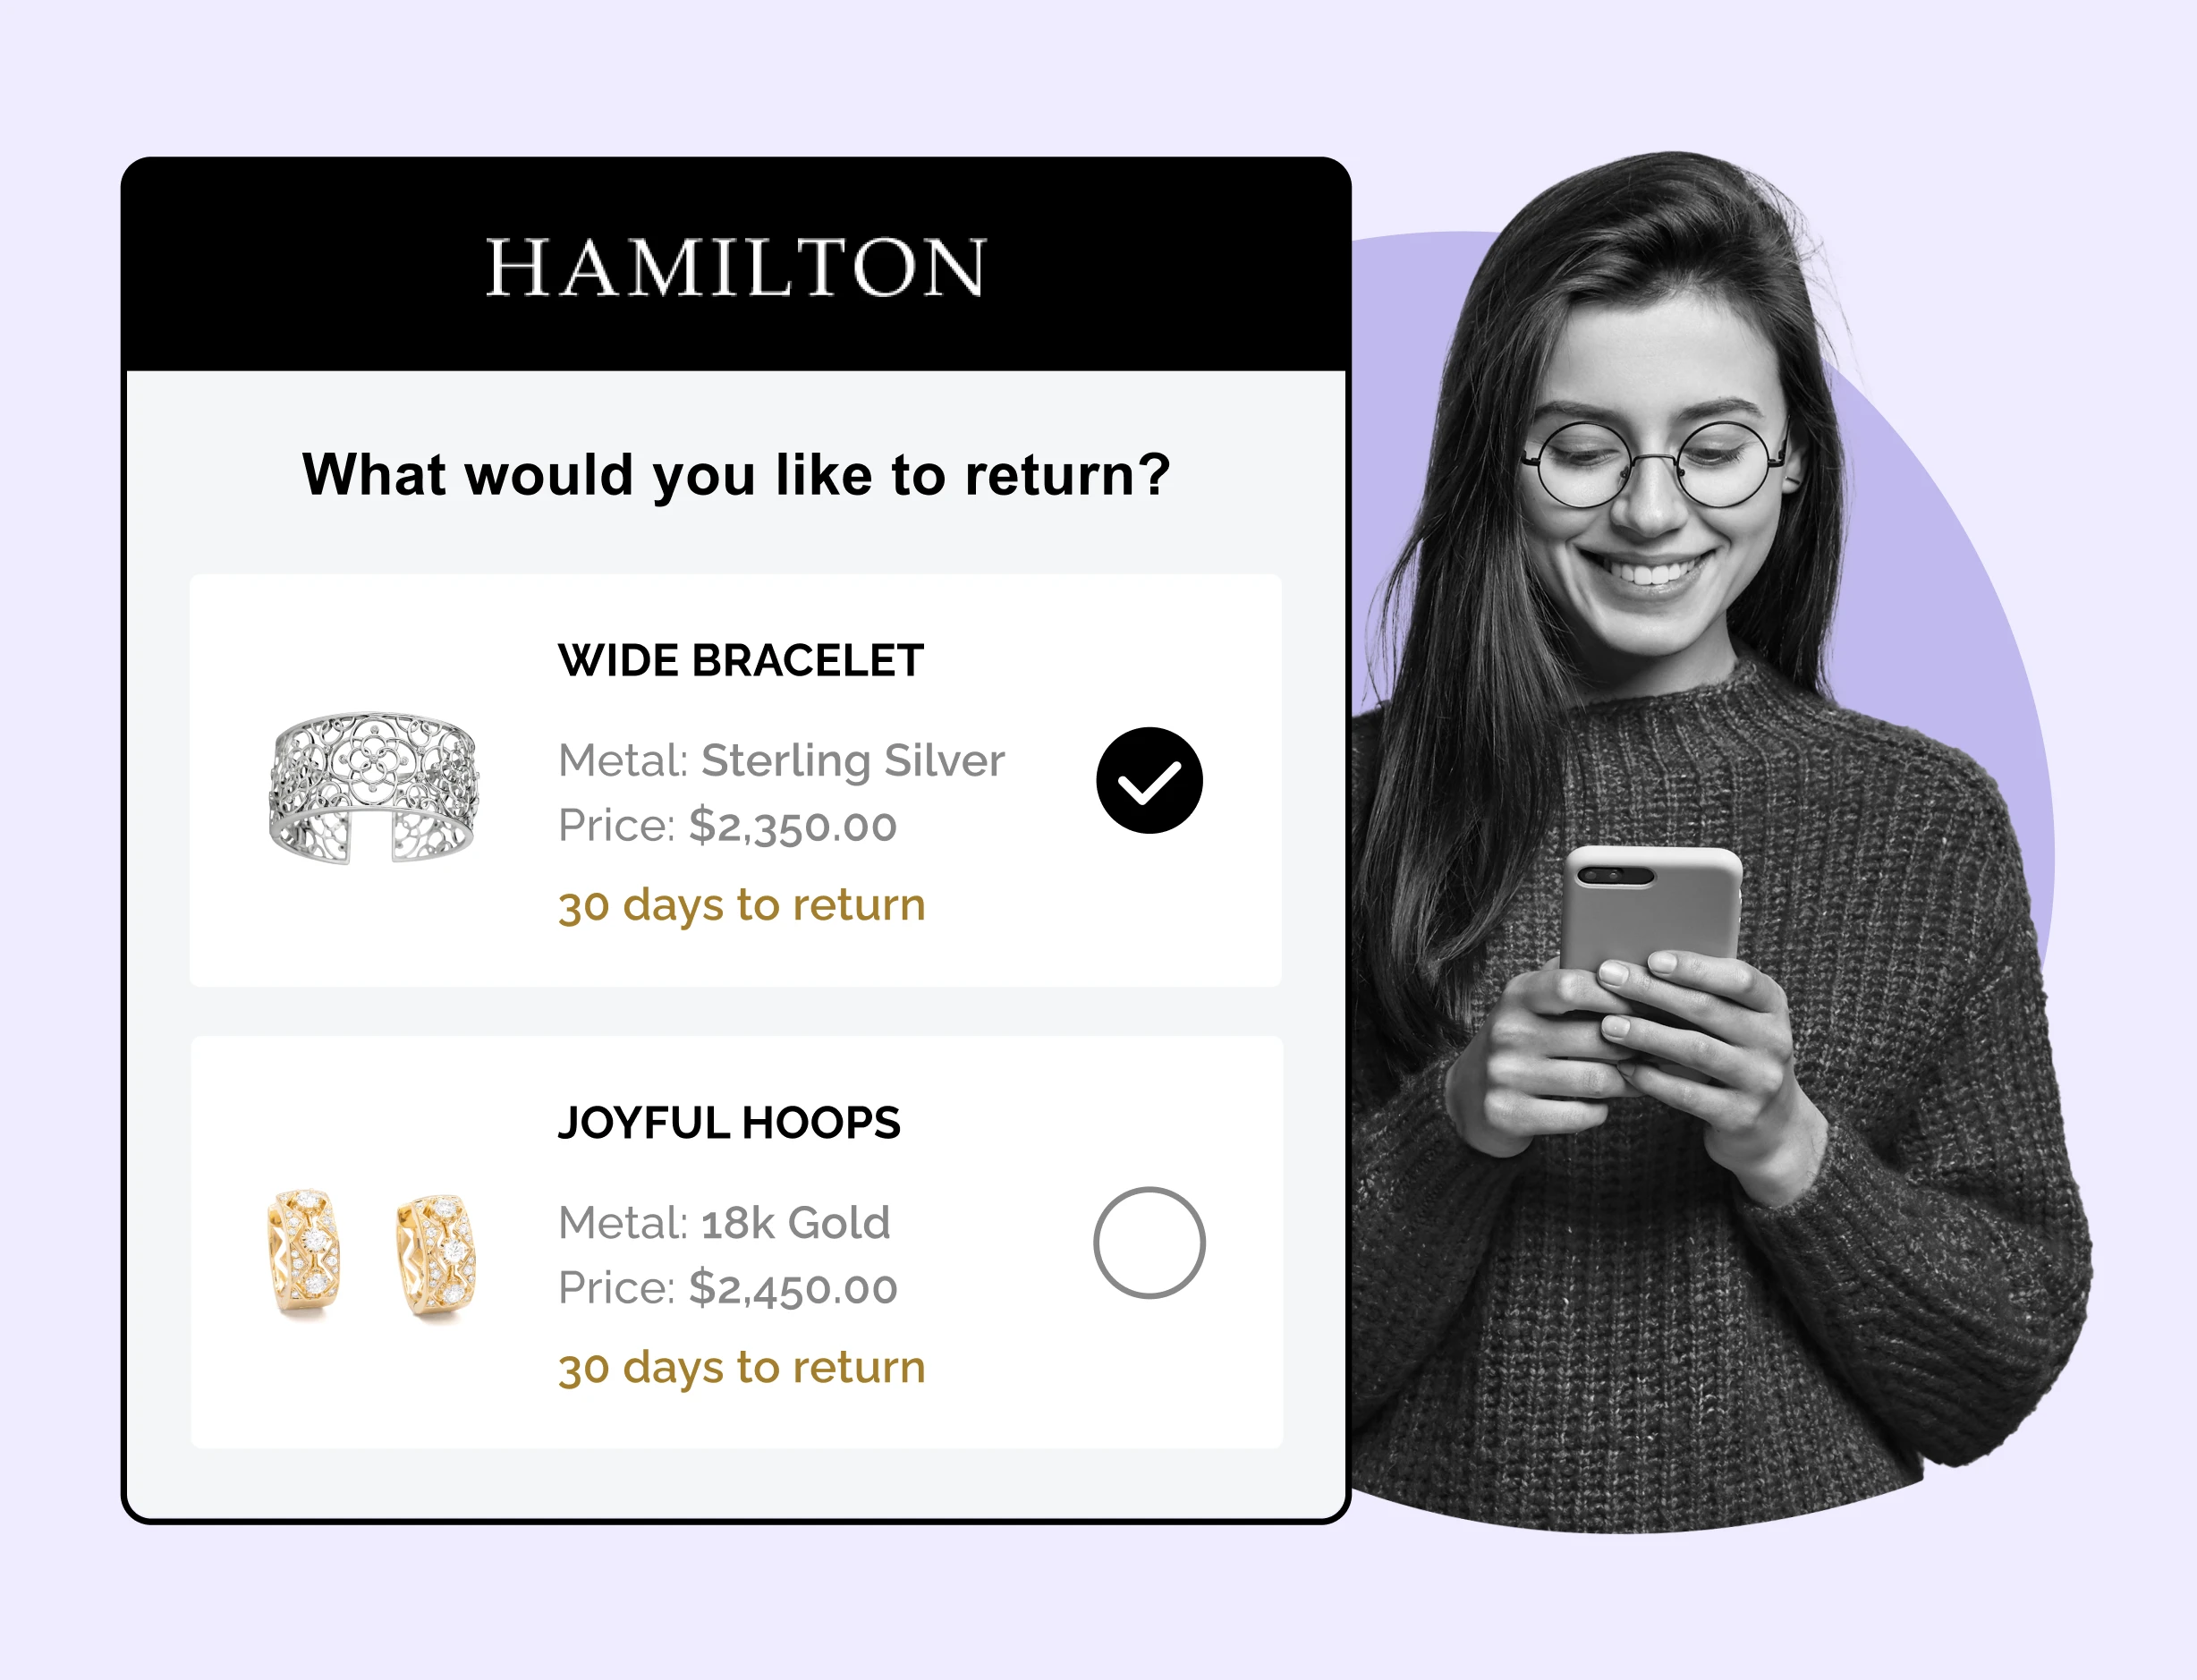 Hamilton jewelers using WeSupply returns